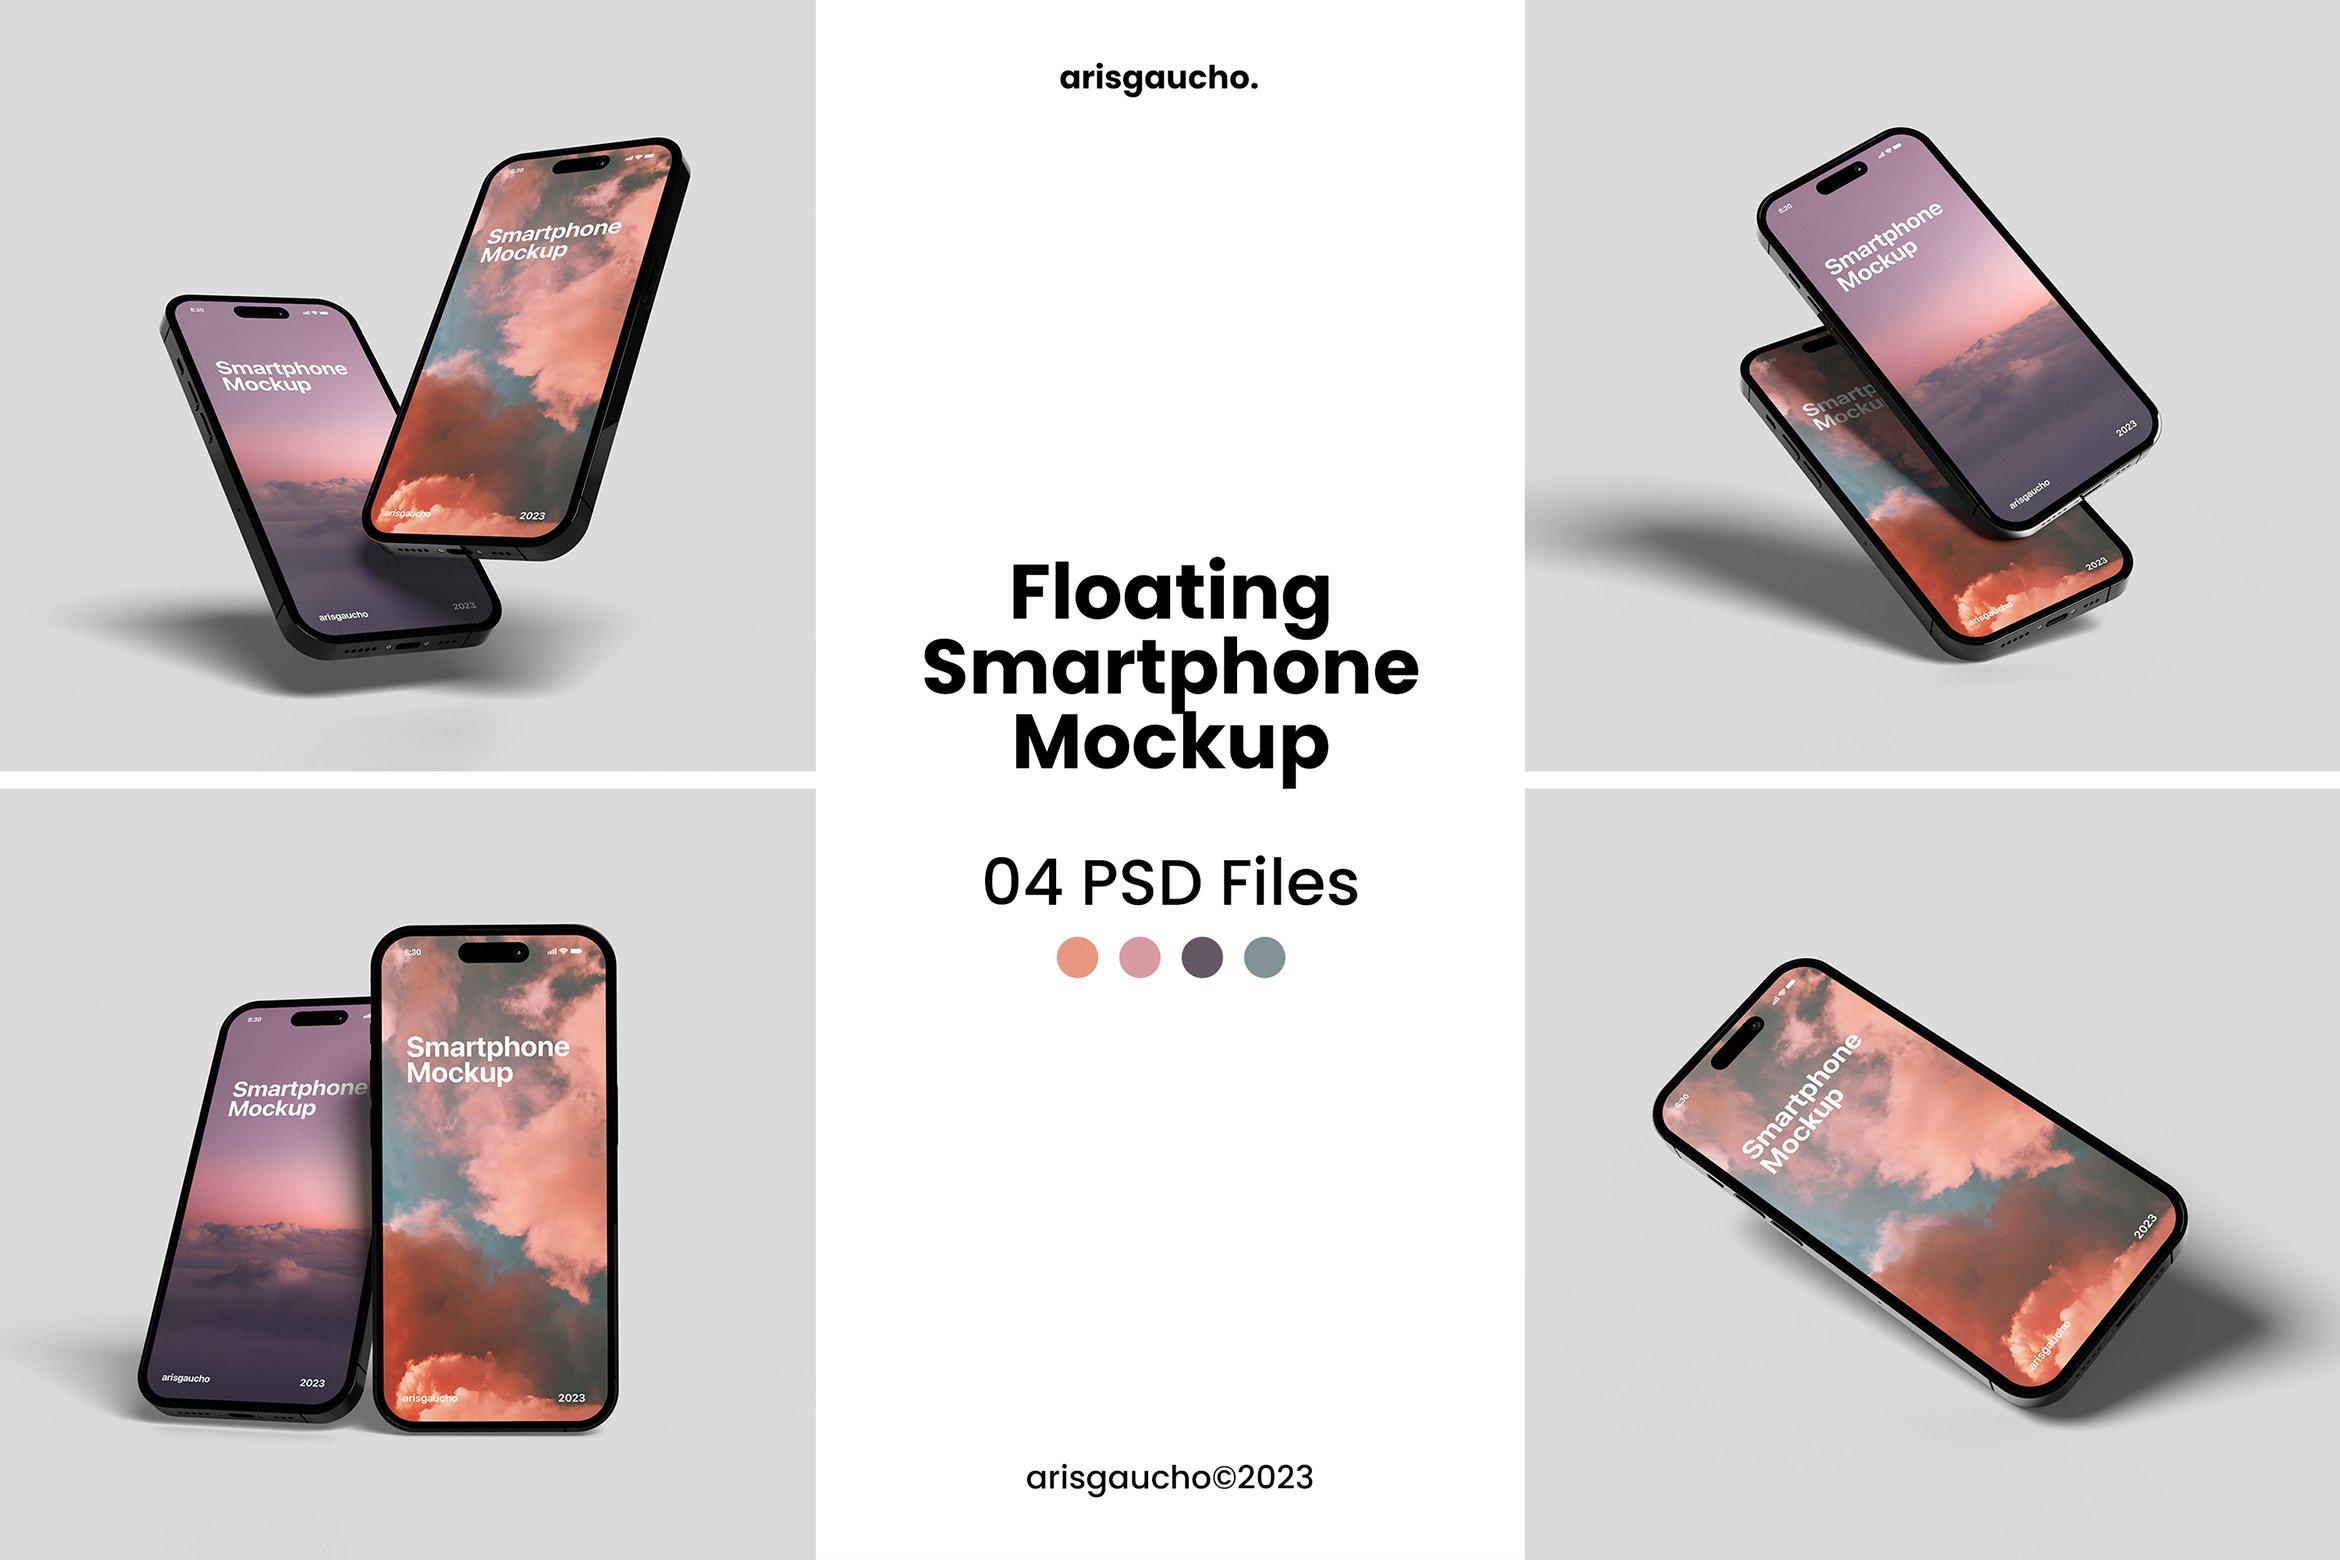 Floating Smartphone Mockup cover image.